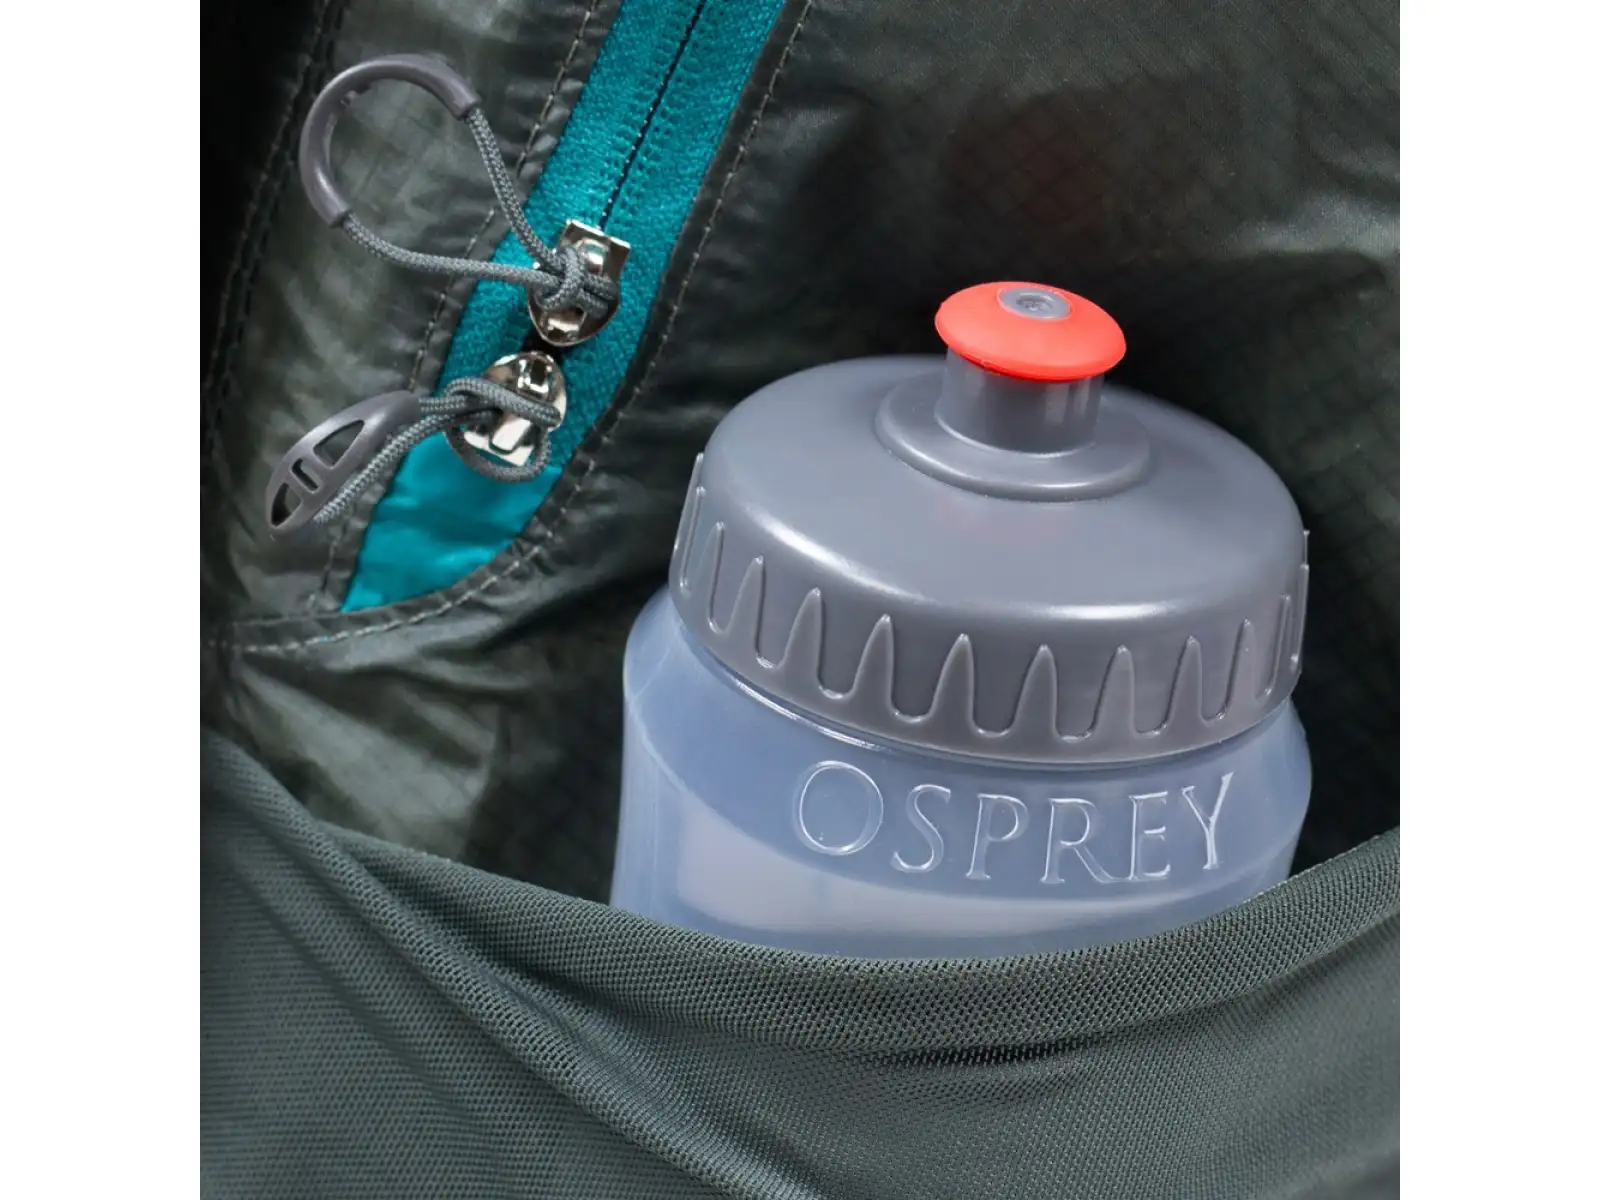 Osprey Ultralight Stuff pack batoh shadow grey